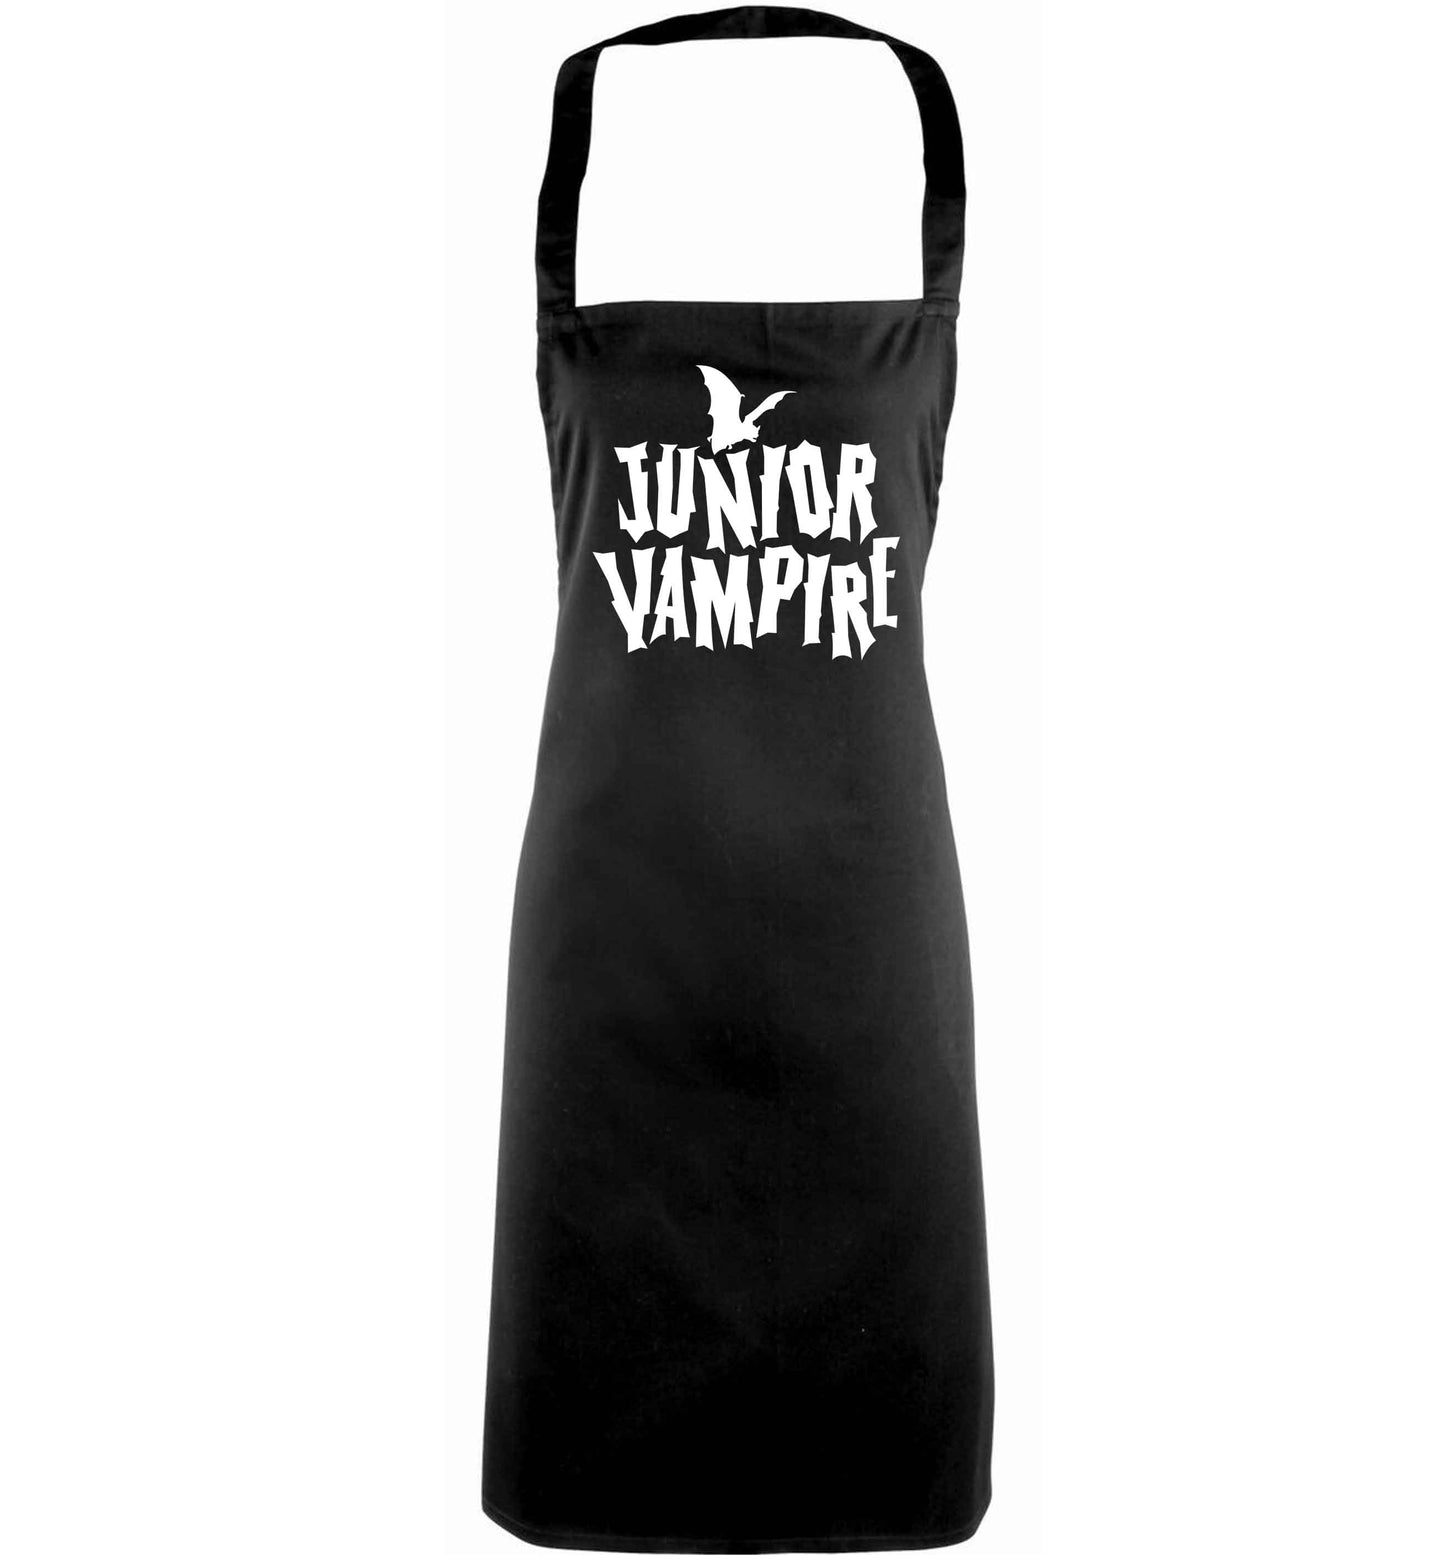 Junior vampire adults black apron